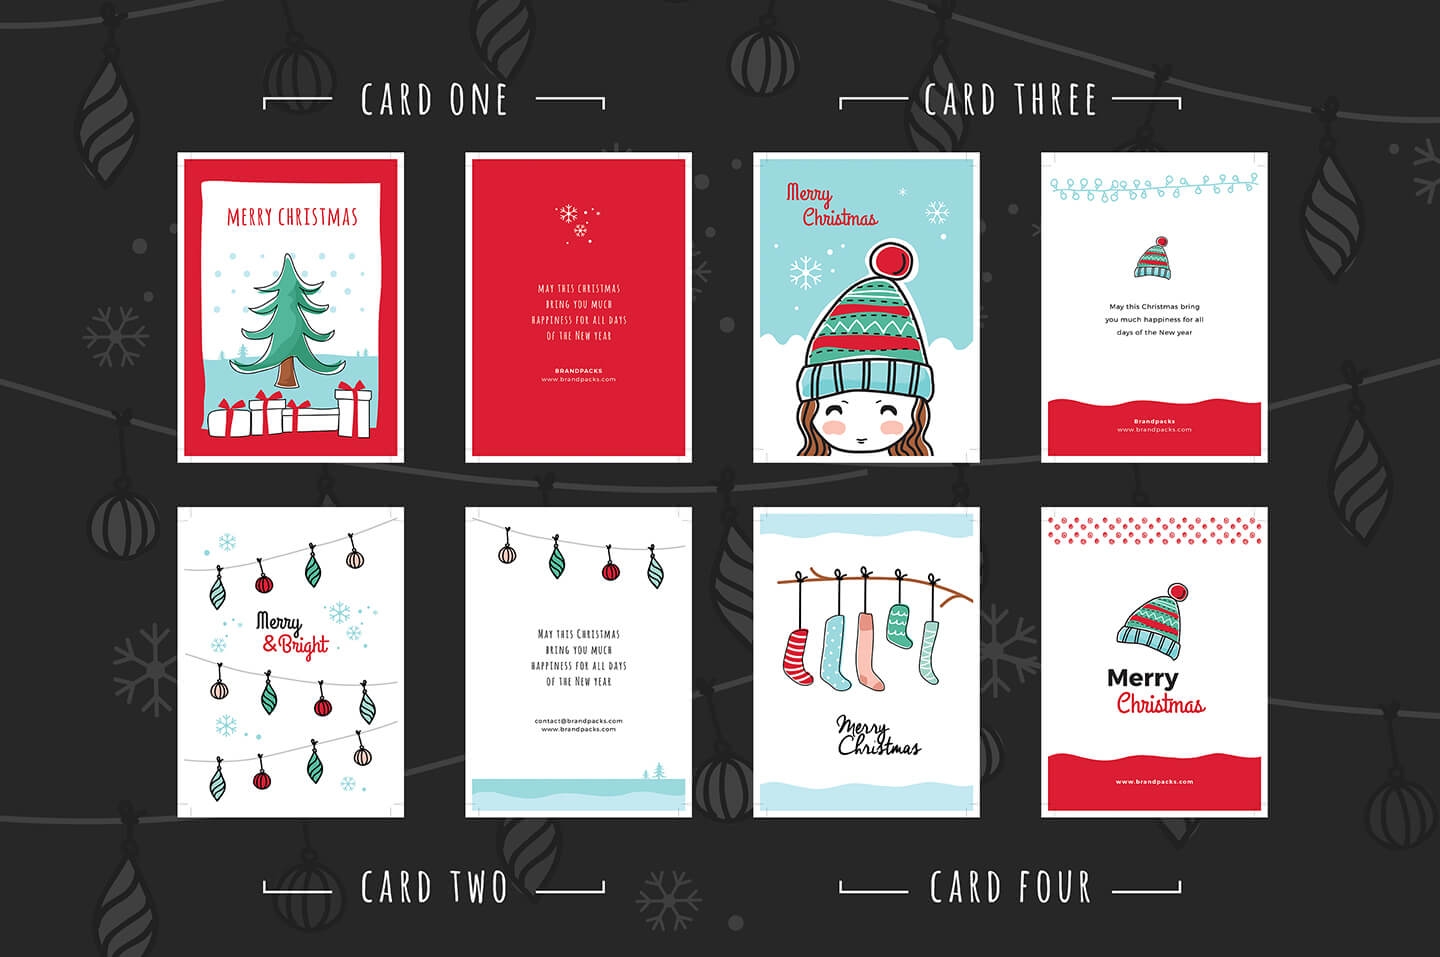 Free Christmas Card Templates For Photoshop Illustrator Regarding